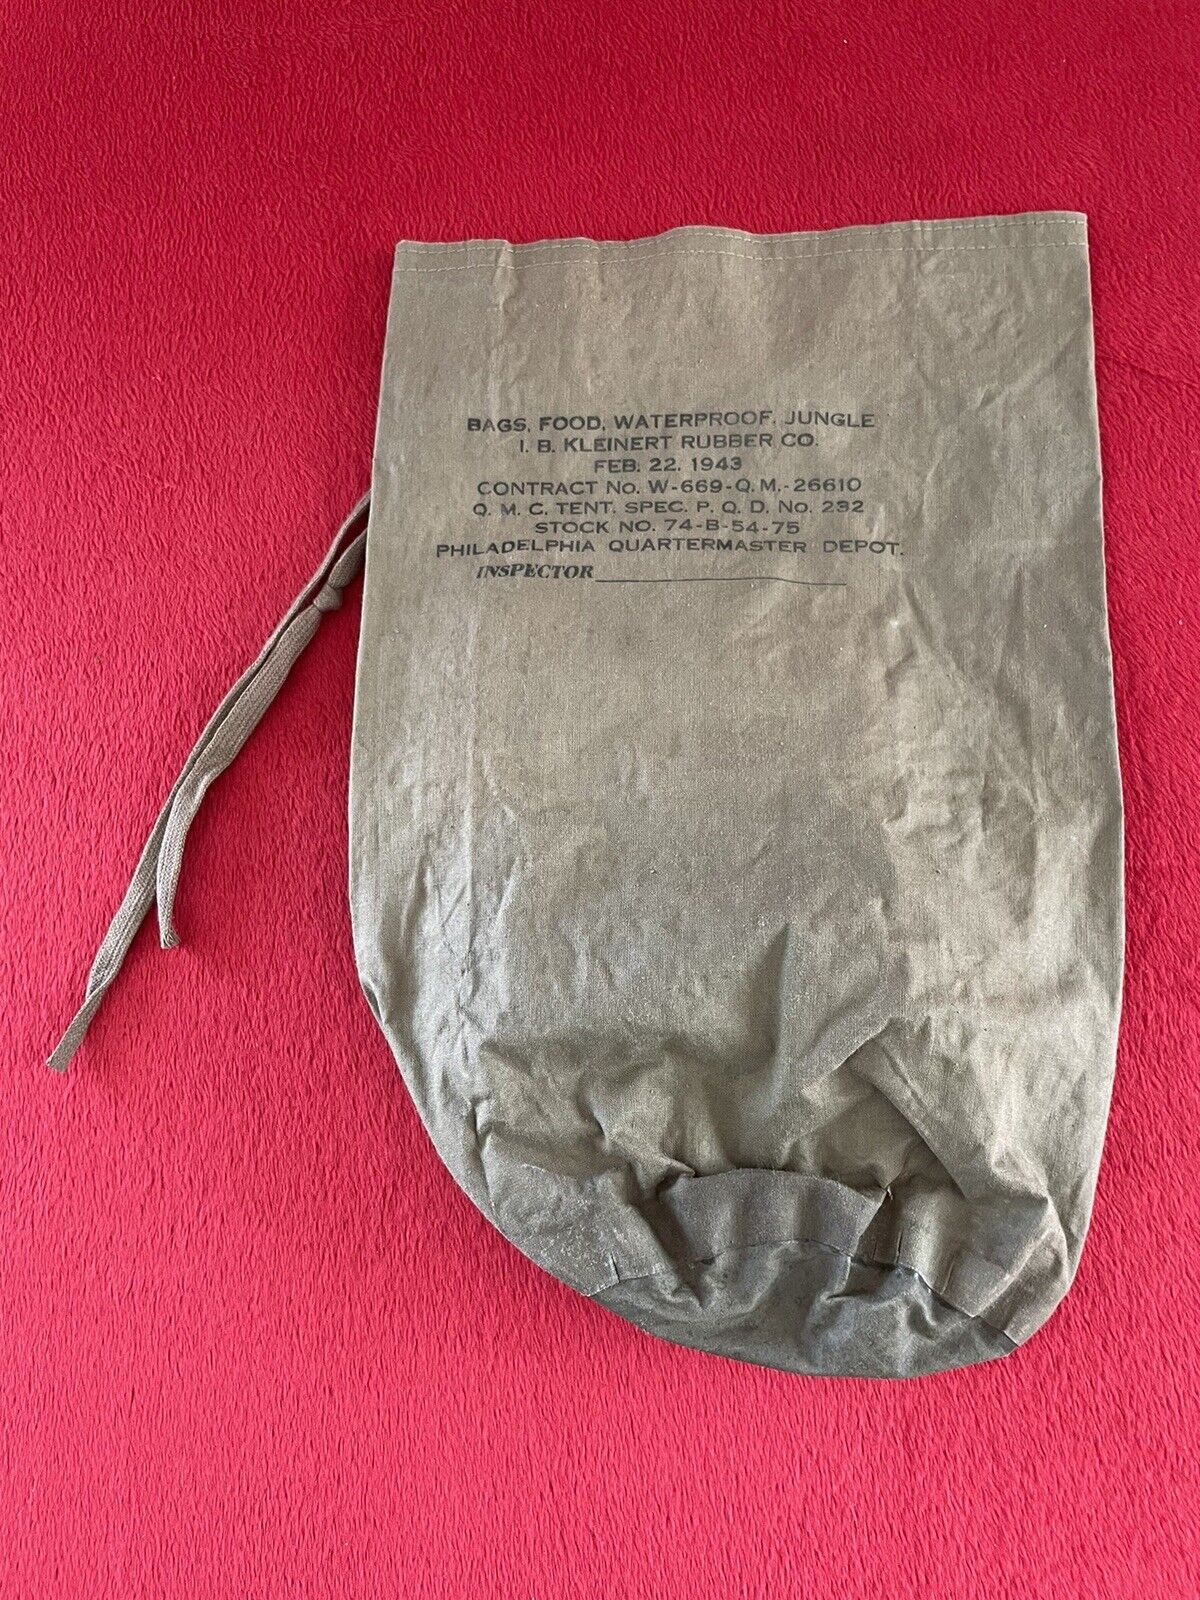 WW2 USMC Army Jungle Food Waterproof Bag Dated 1943 WWII